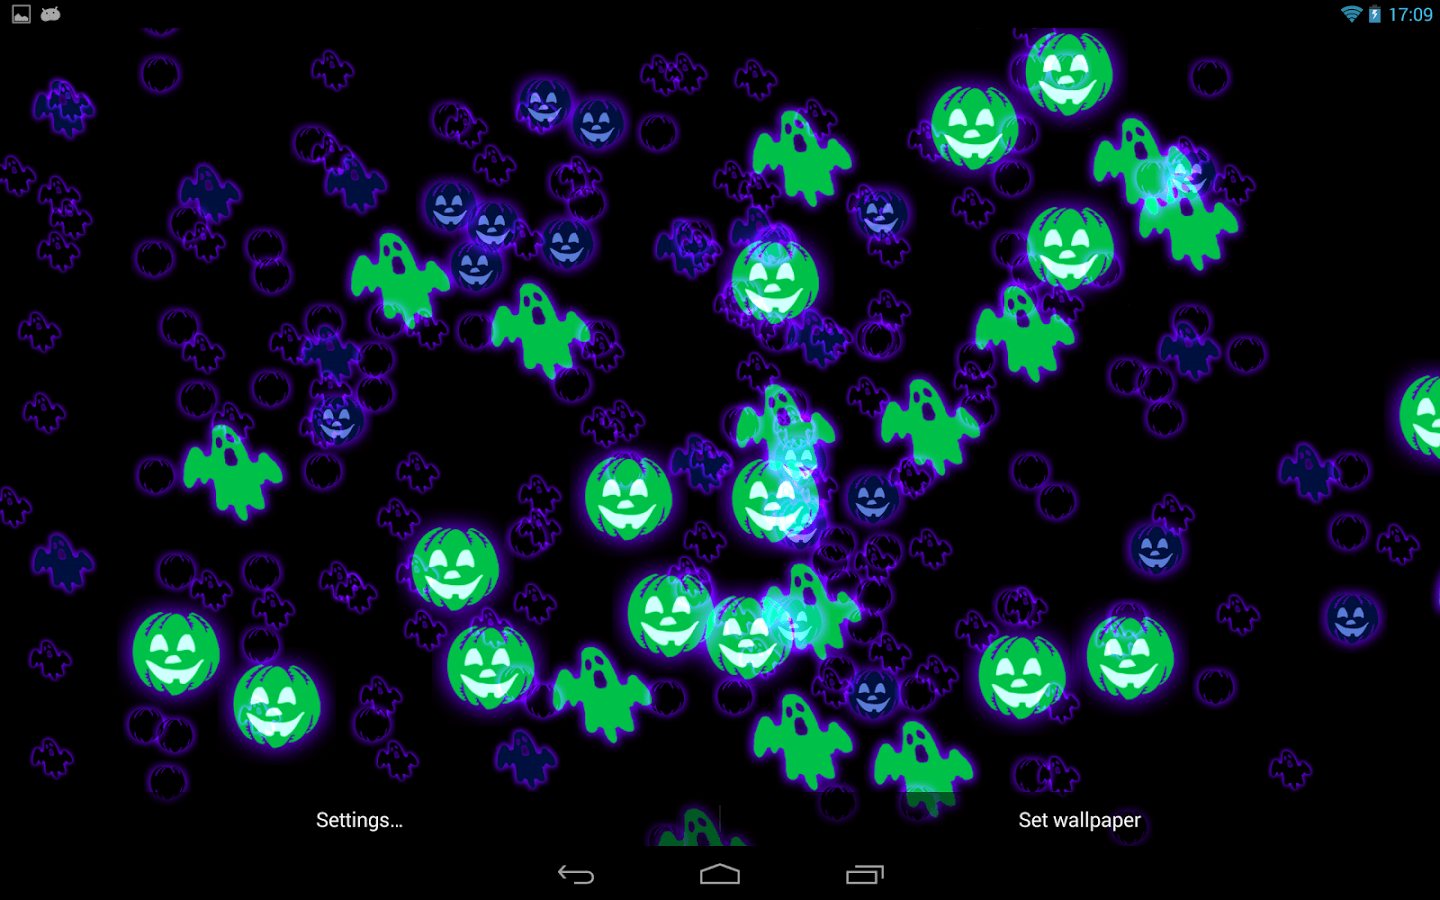 Halloween Lights 2016 Apps on Google Play